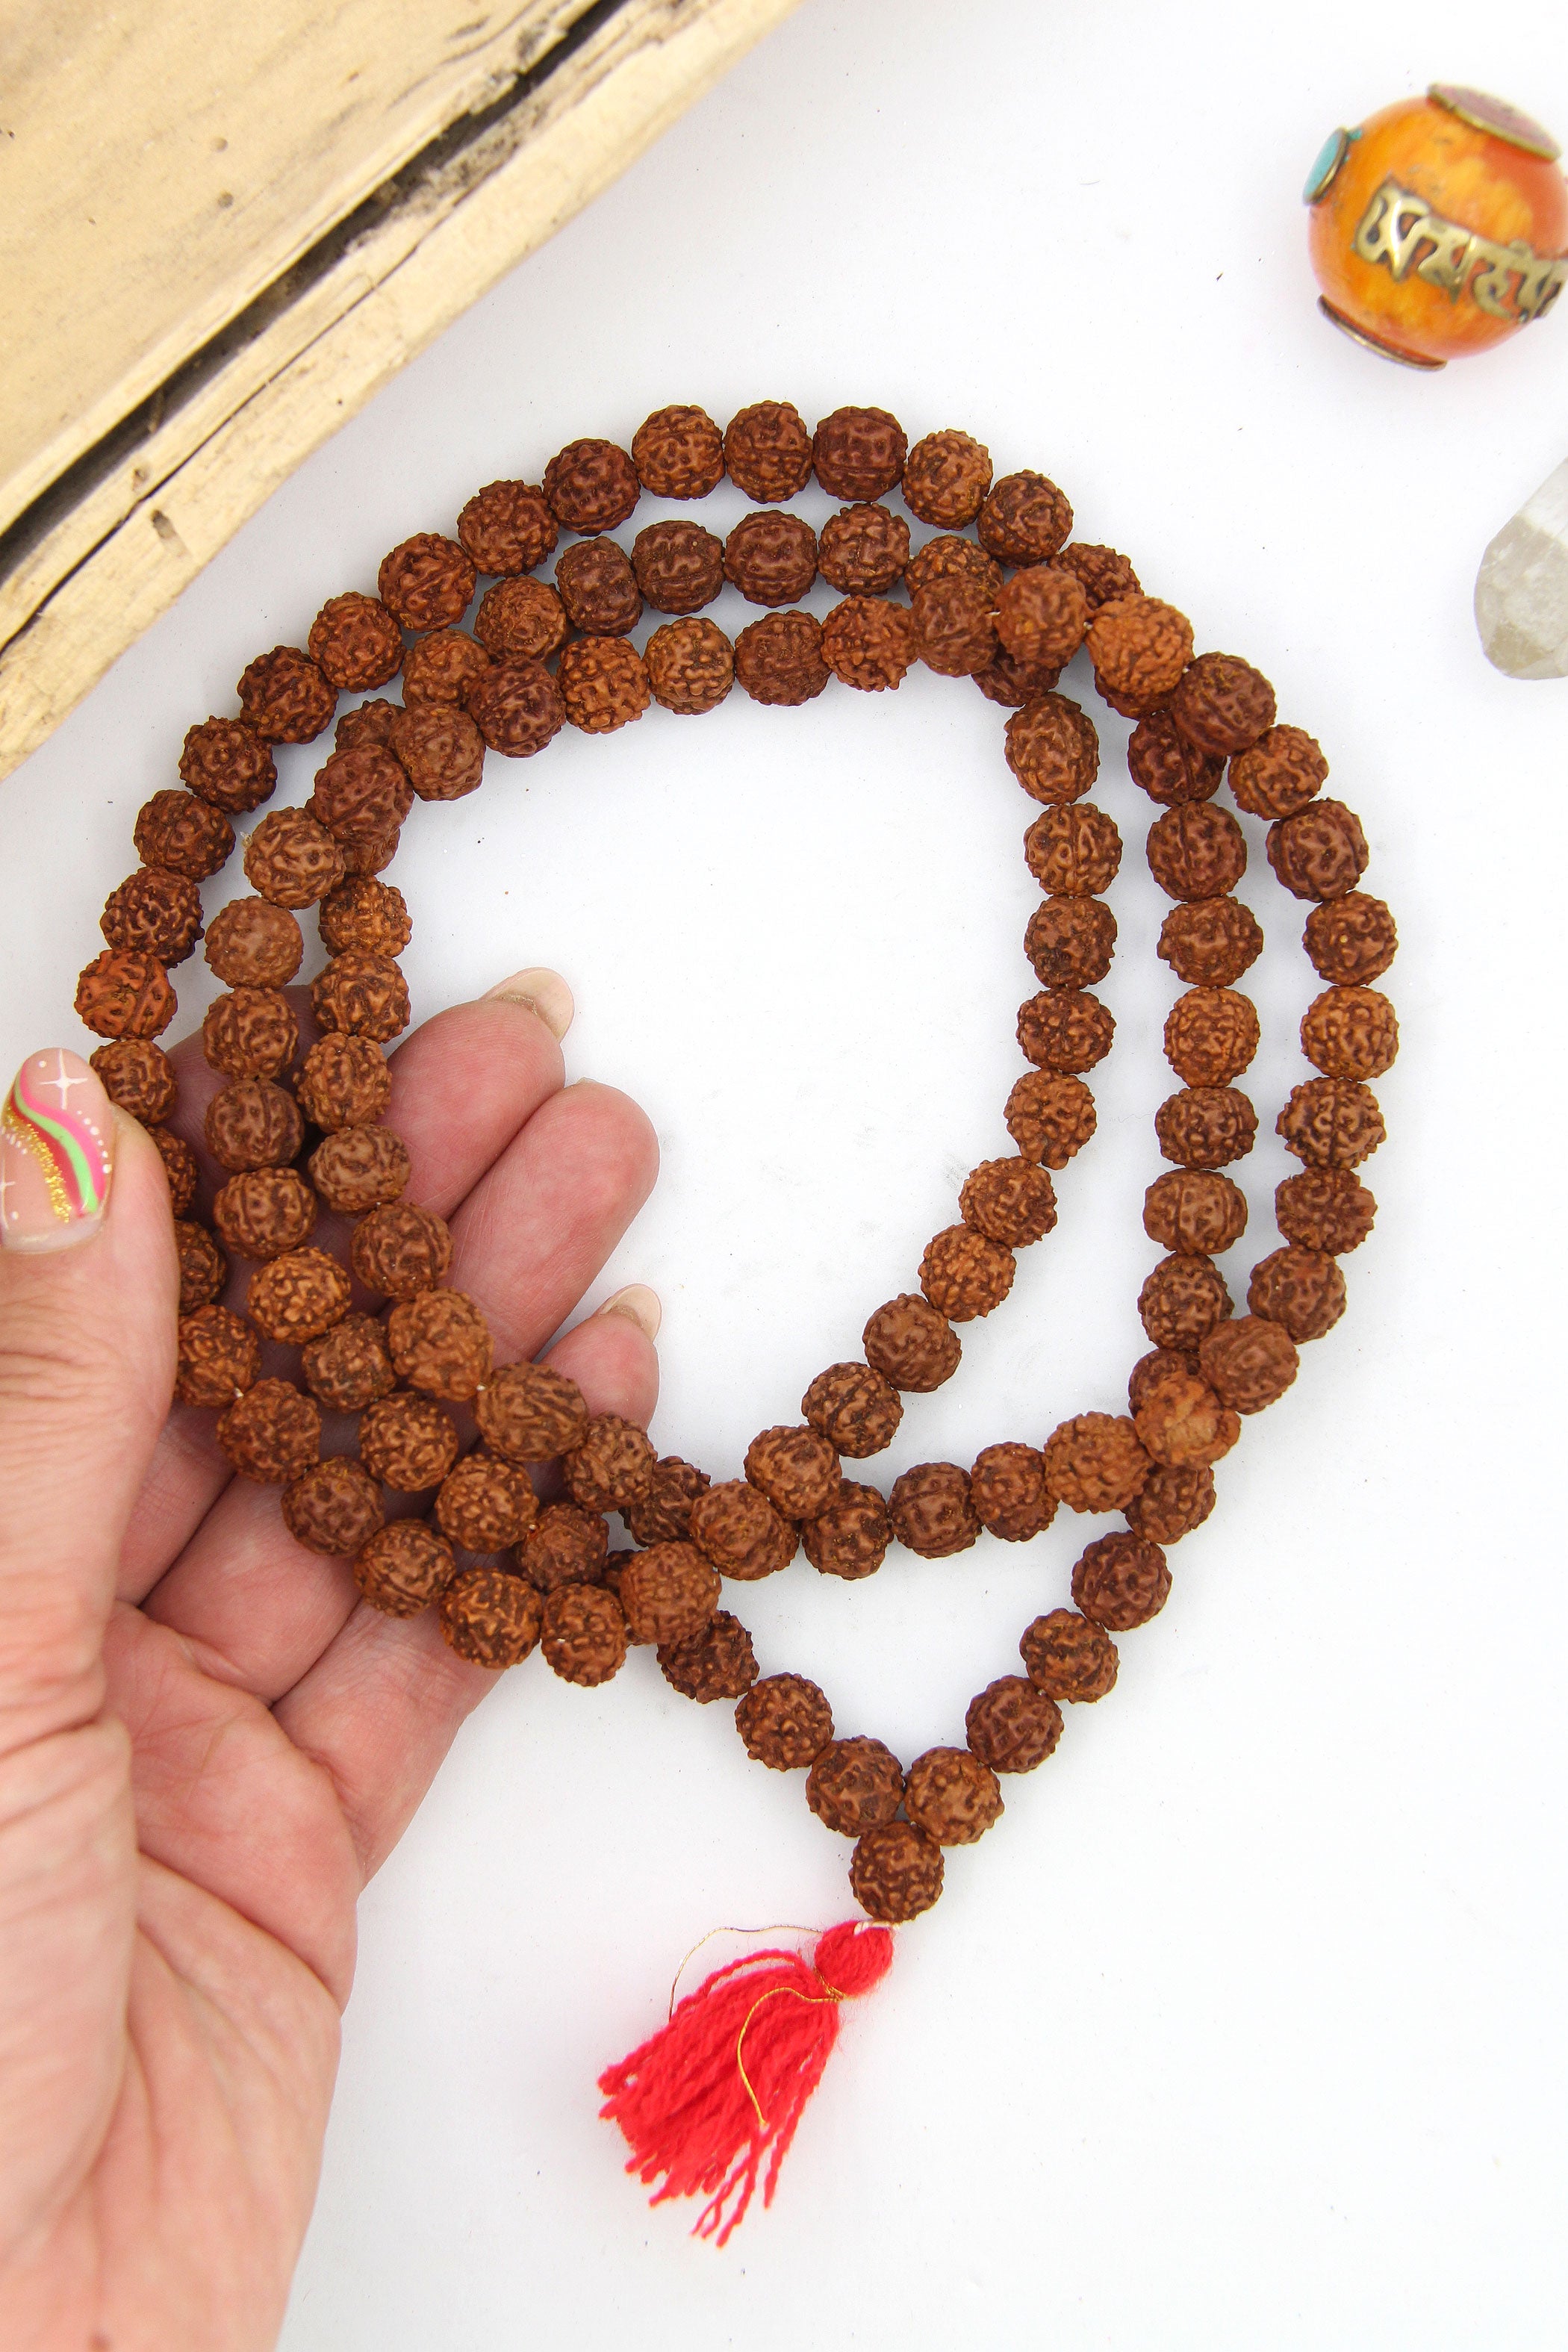 Oversized Prayer Beads with Cross